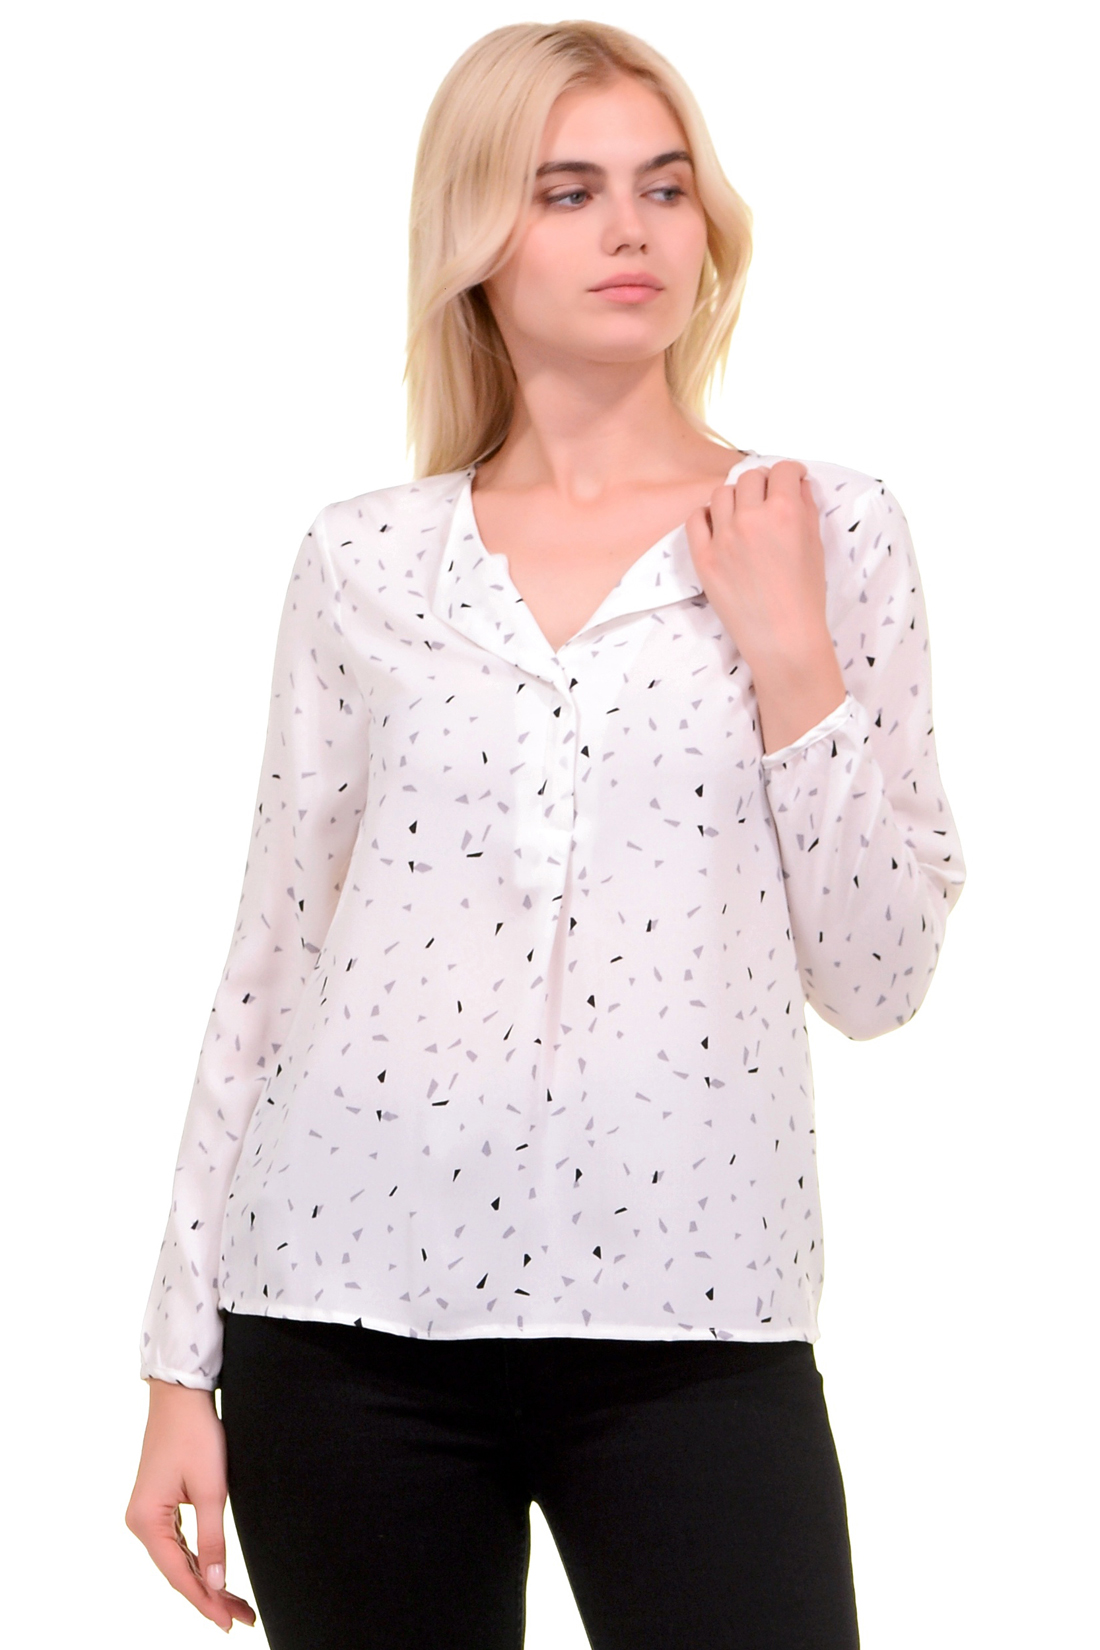 Блузка с геометрическим принтом (арт. baon B179532), размер XL, цвет white printed#белый Блузка с геометрическим принтом (арт. baon B179532) - фото 1